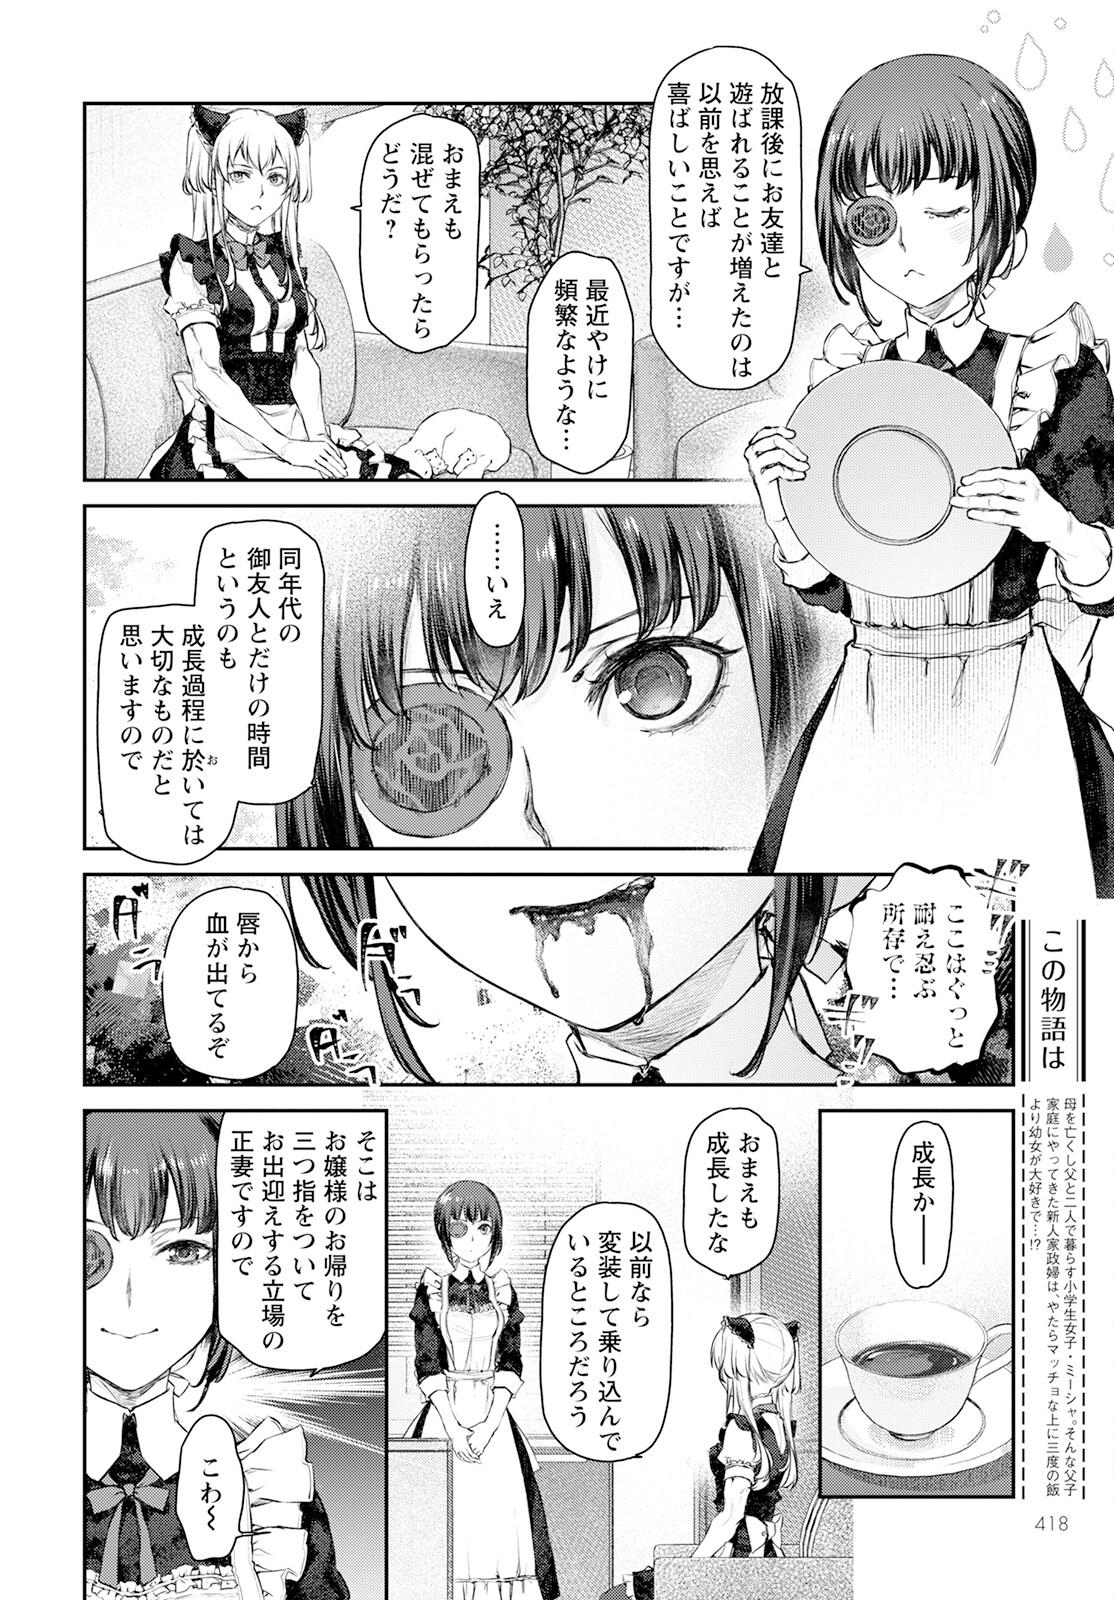 Uchi no Maid ga Uzasugiru! - Chapter 55 - Page 2